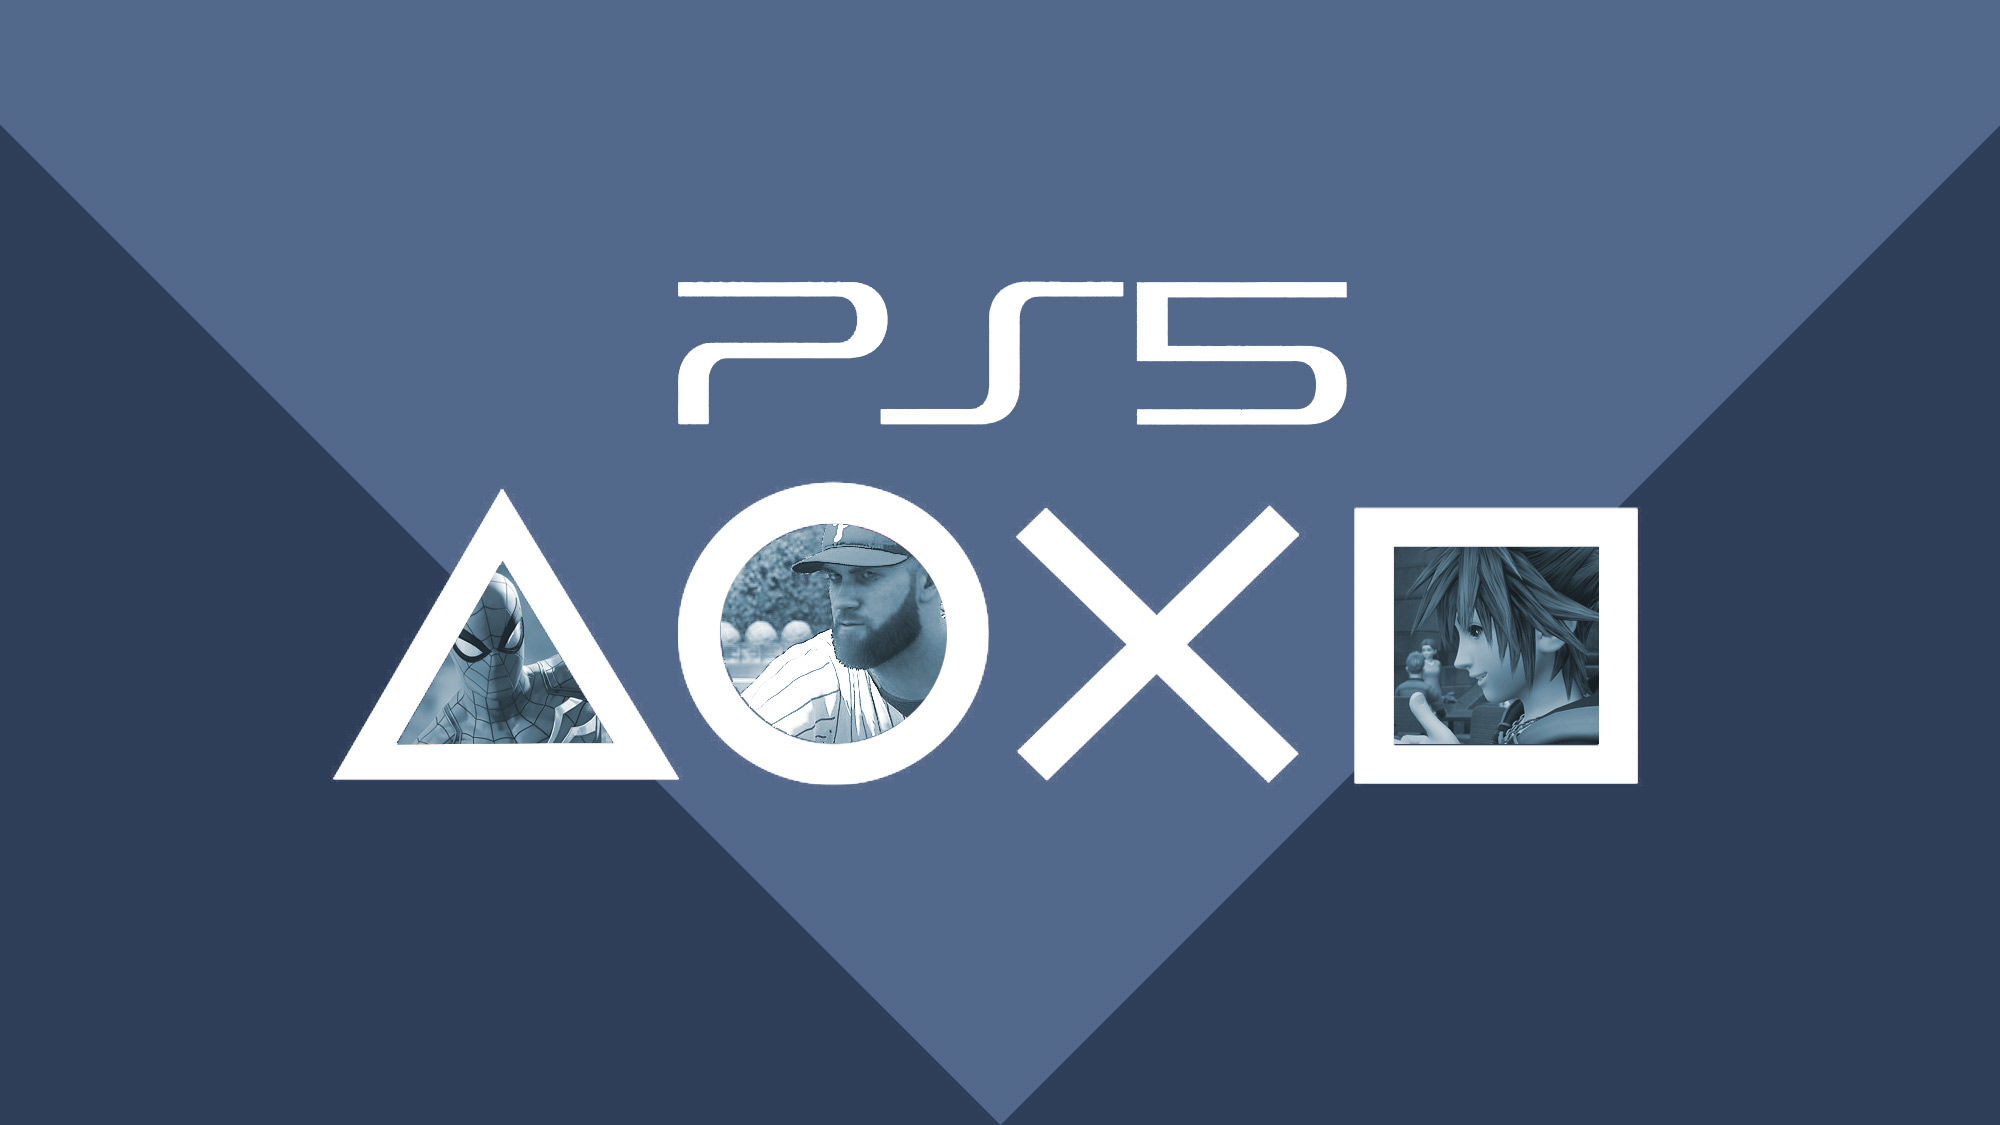 More information about "Παρακολουθήστε ζωντανά την επίσημη παρουσίαση του PS5 από τον Mark Cerny"